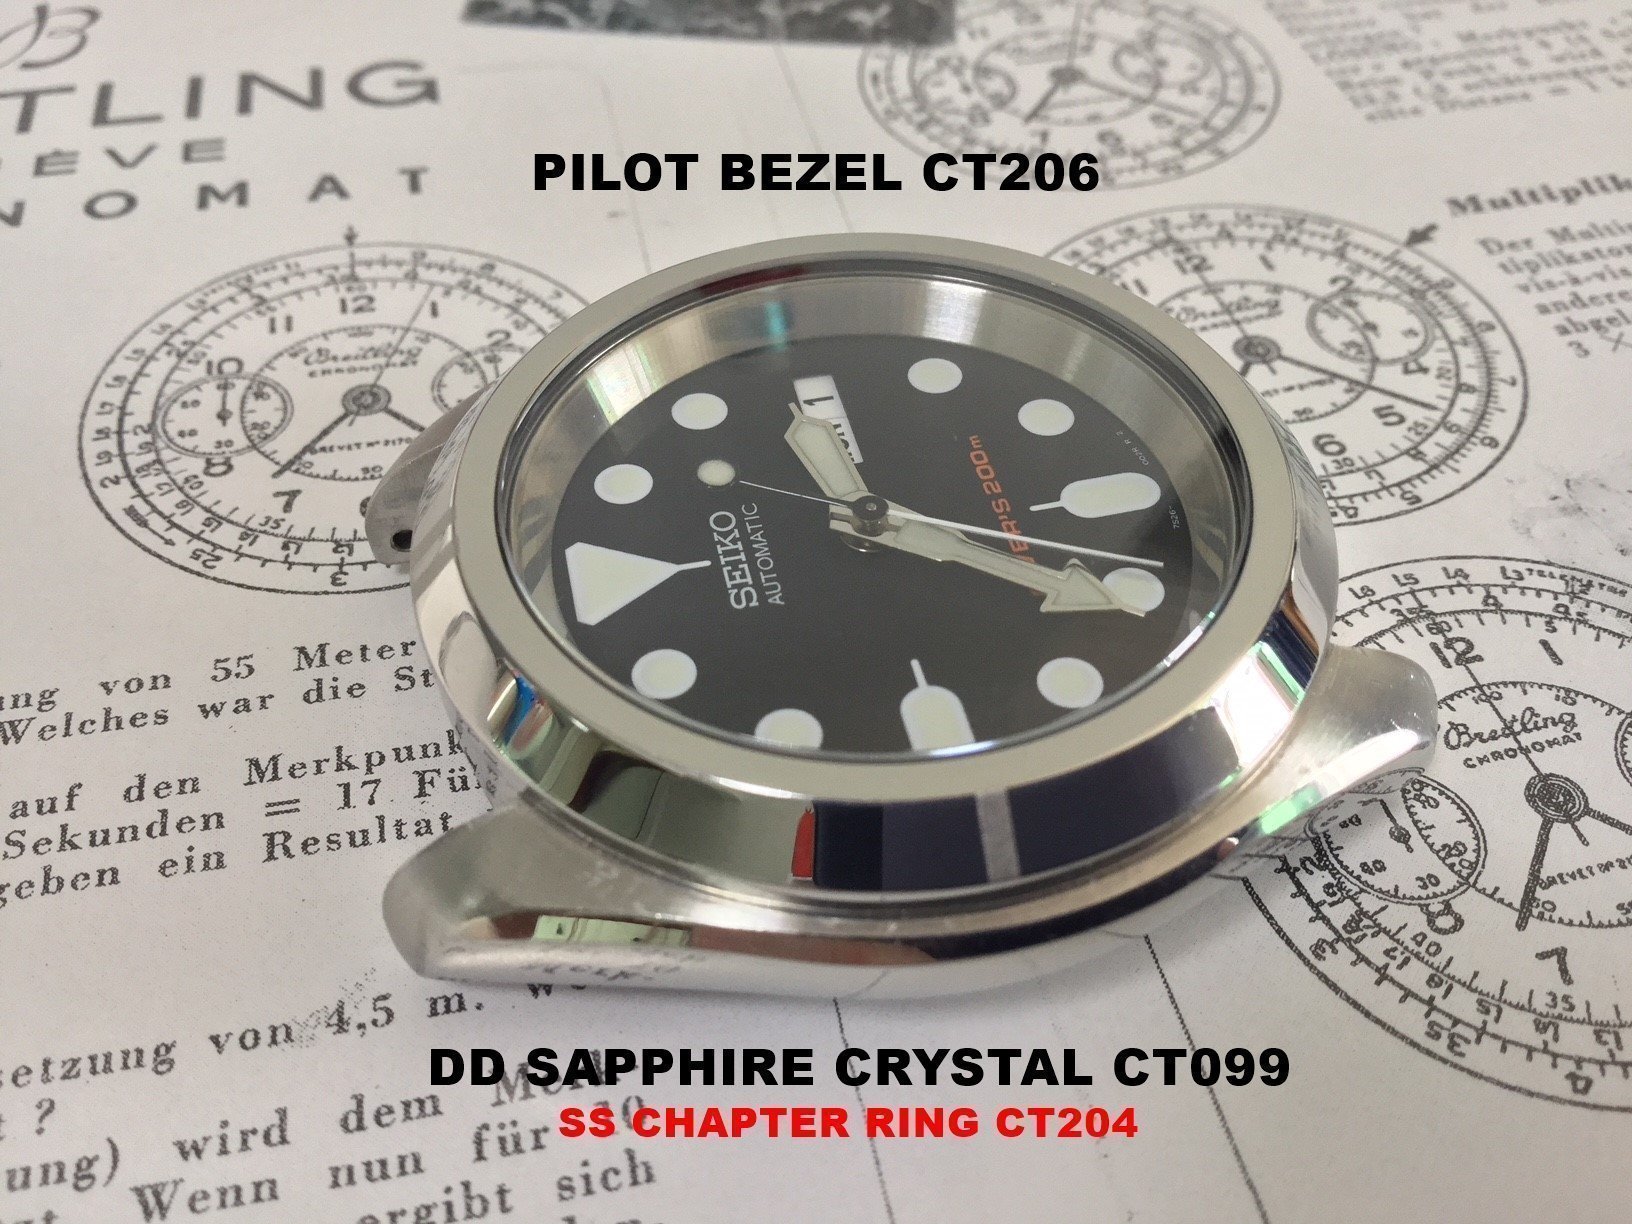 SKX007 SRPD Double Dome Sapphire Crystal For Pilot Bezels | CT099